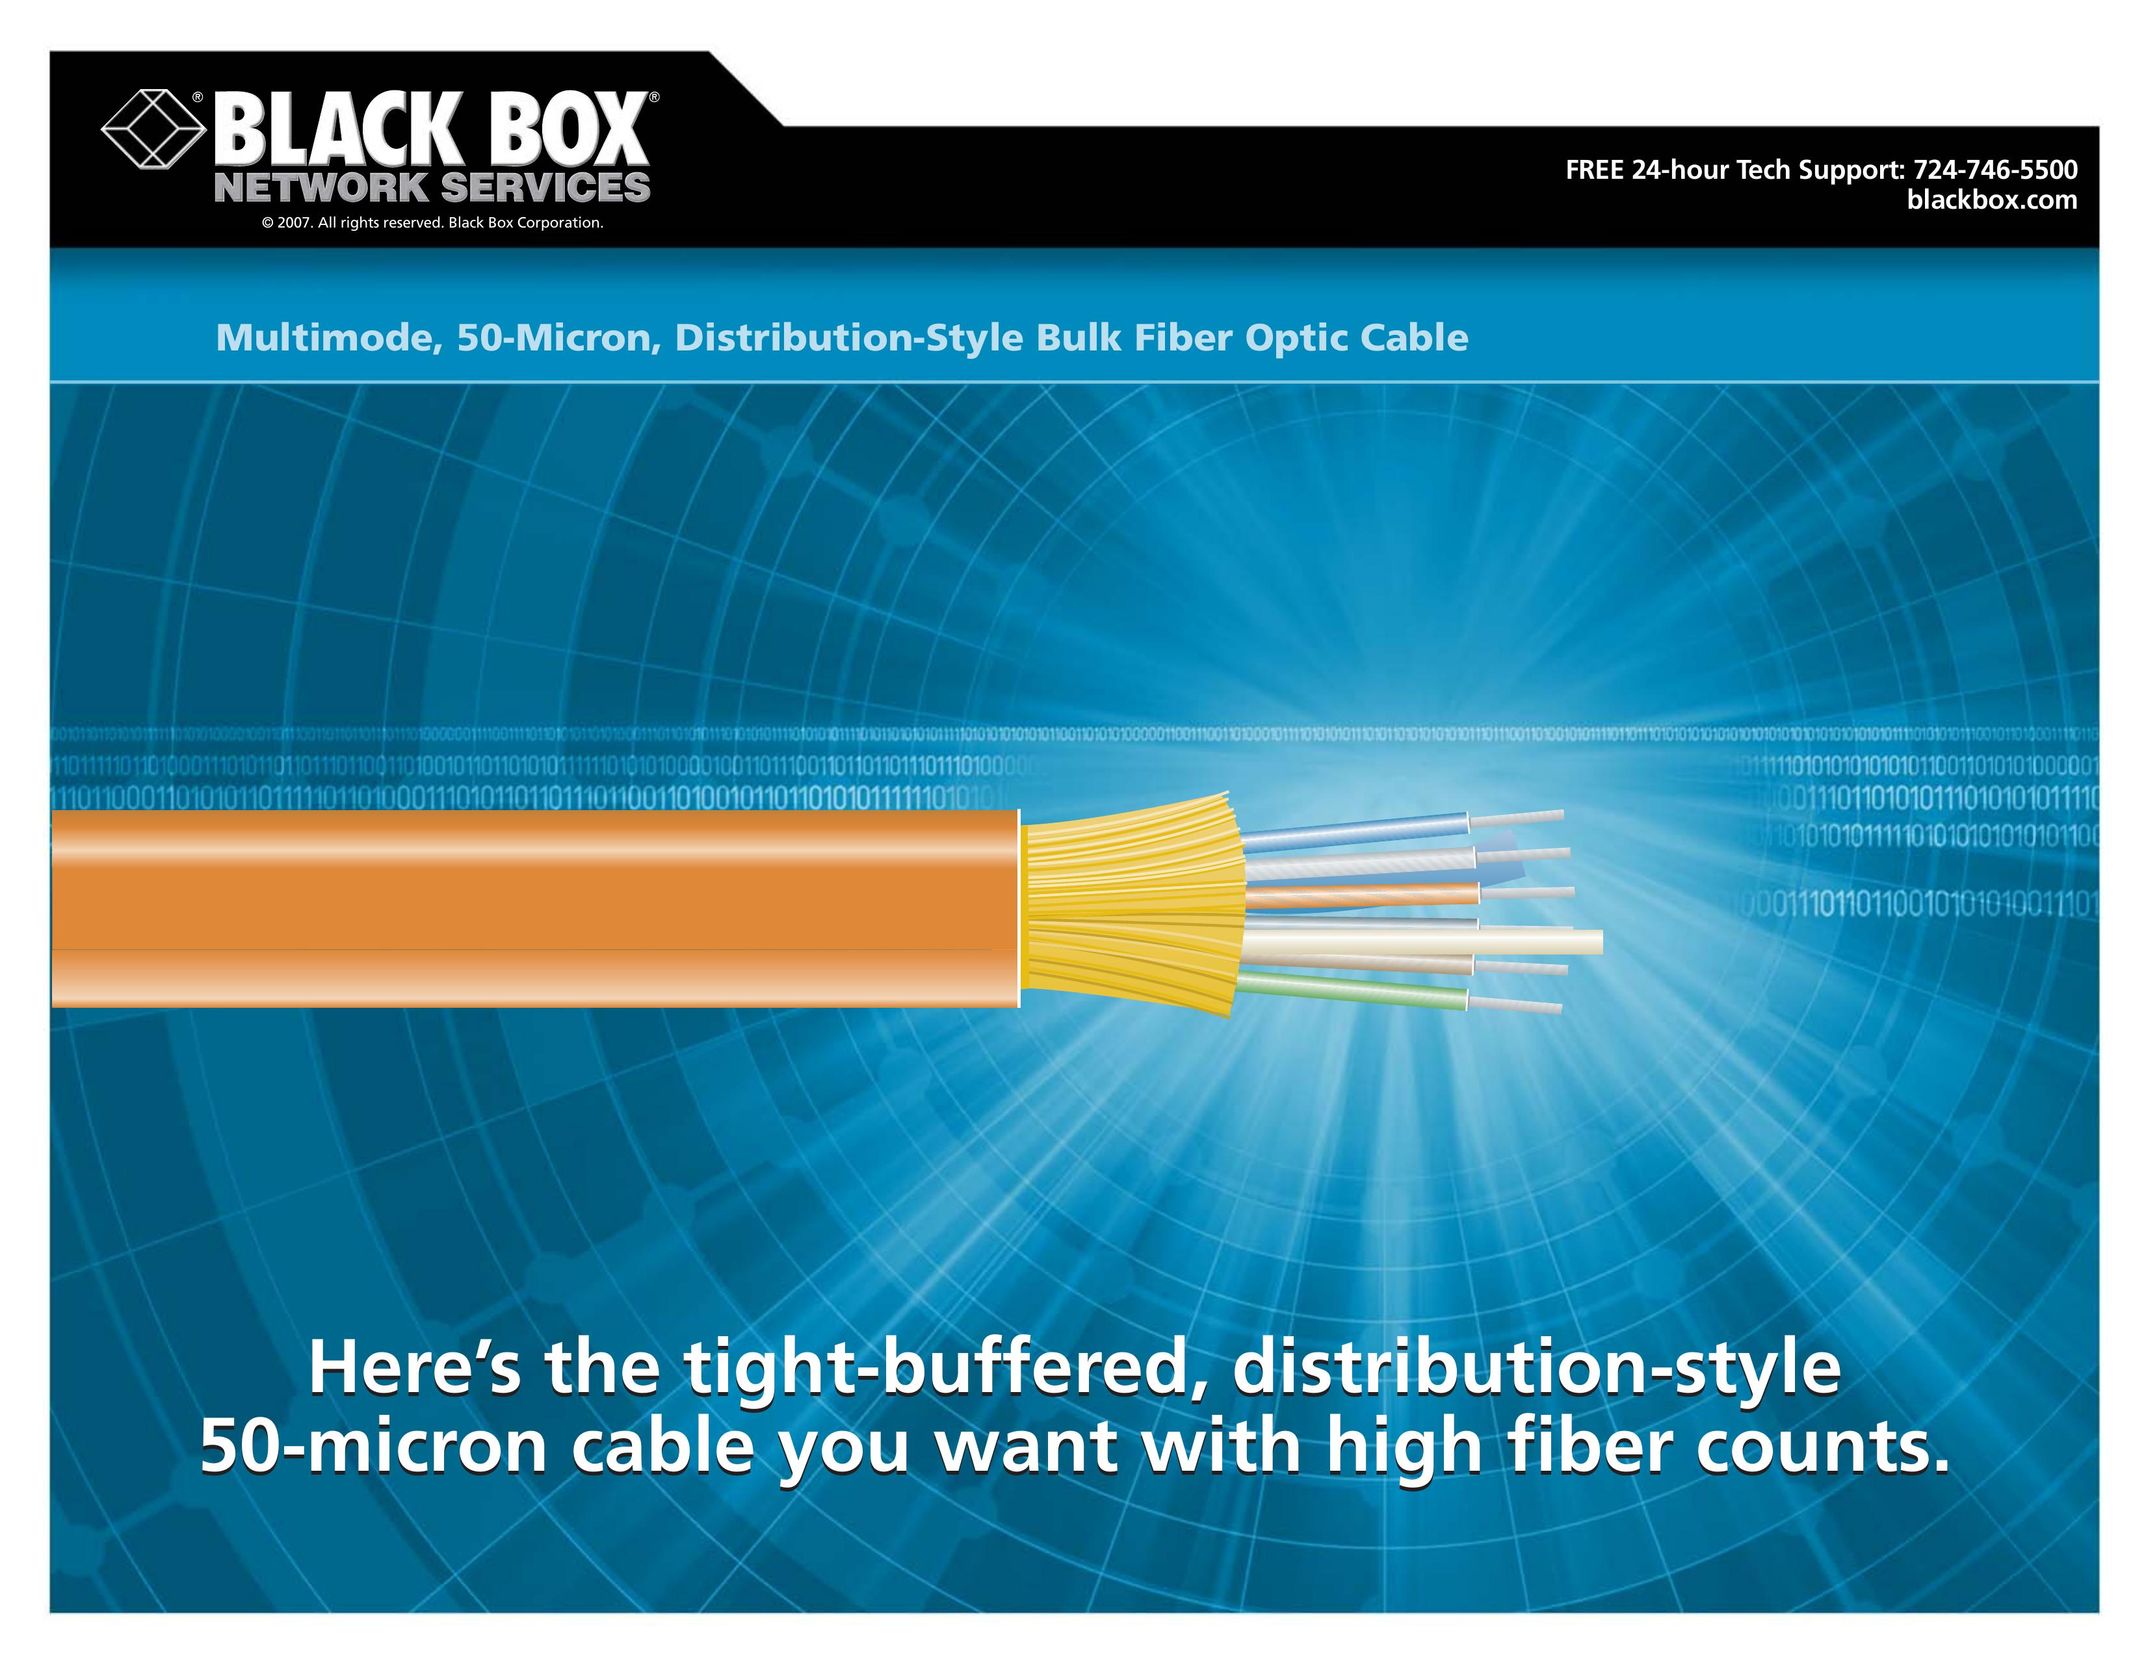 Black Box Bulk Fiber Optic Cable Network Router User Manual